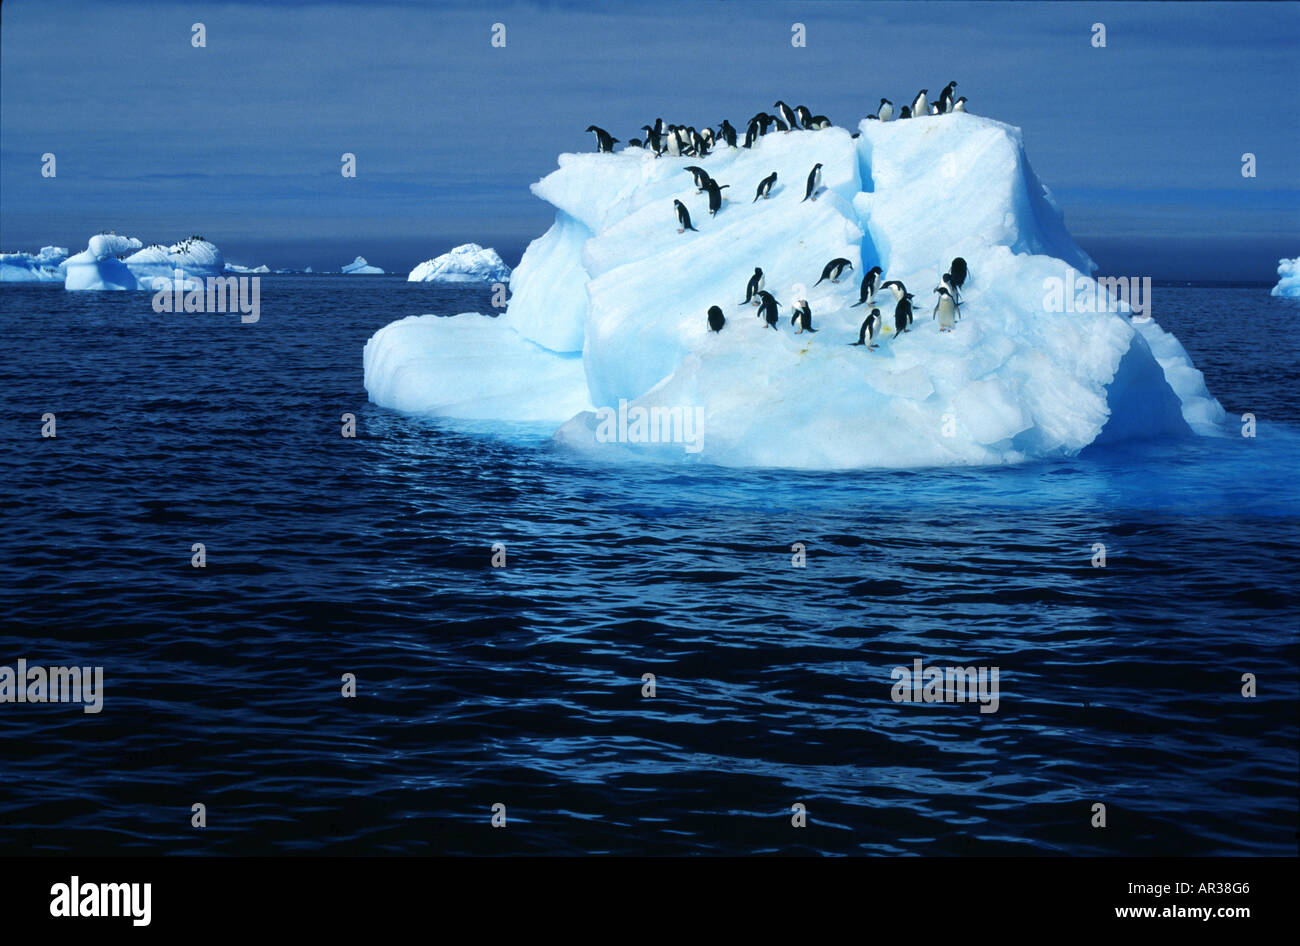 Adelie penguins on an iceberg, Paulet island, Antarctic peninsula, Antarctica Stock Photo